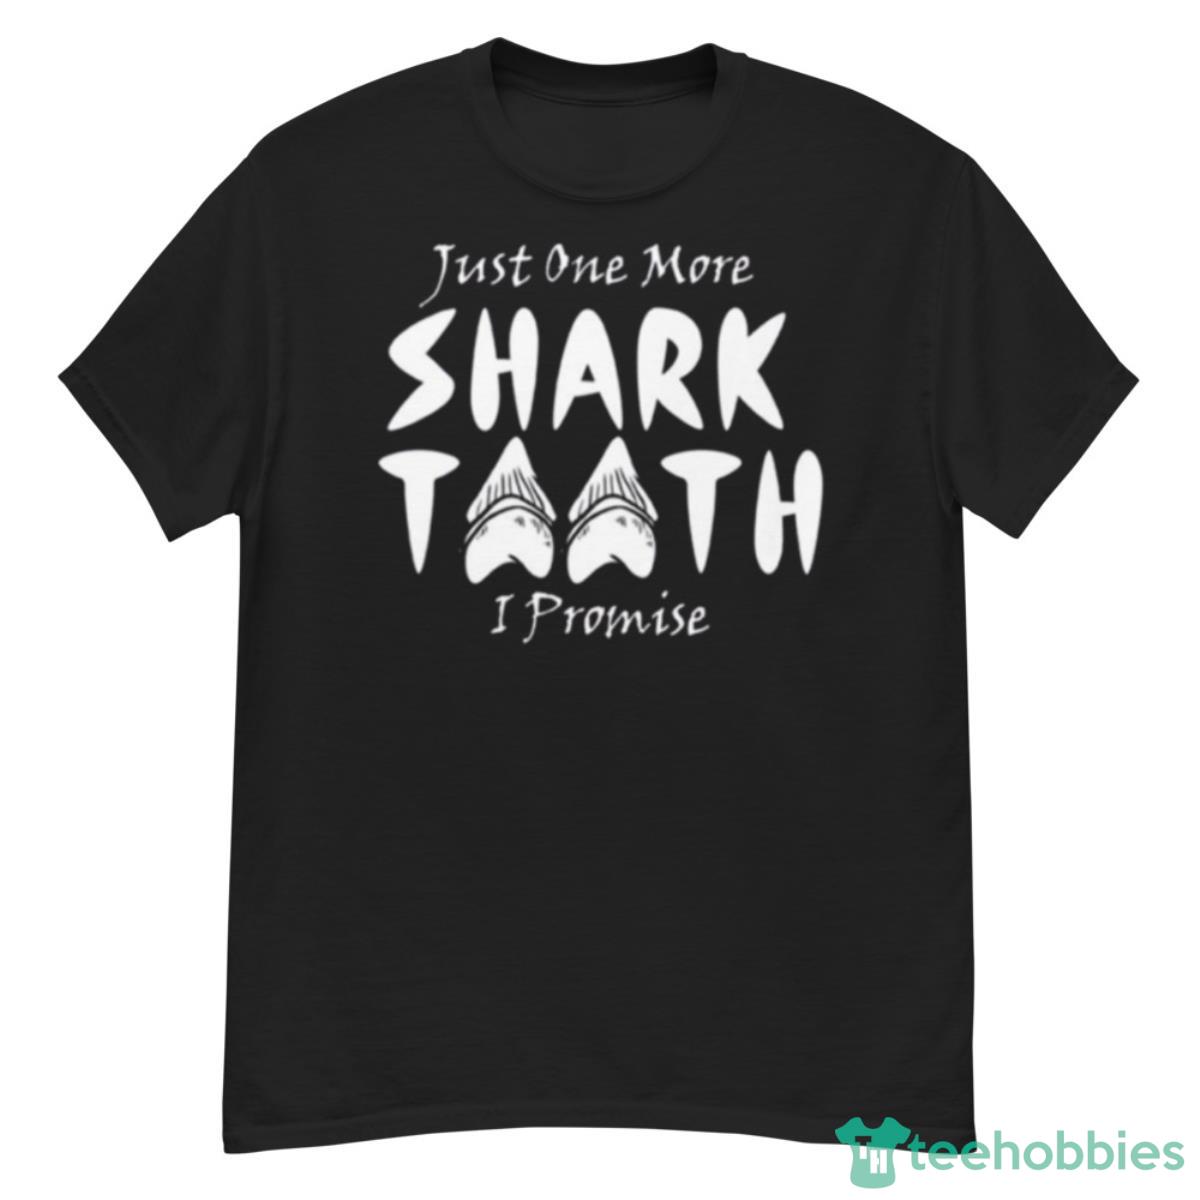 One More Shark Tooth Jurassic World Shirt - G500 Men’s Classic T-Shirt